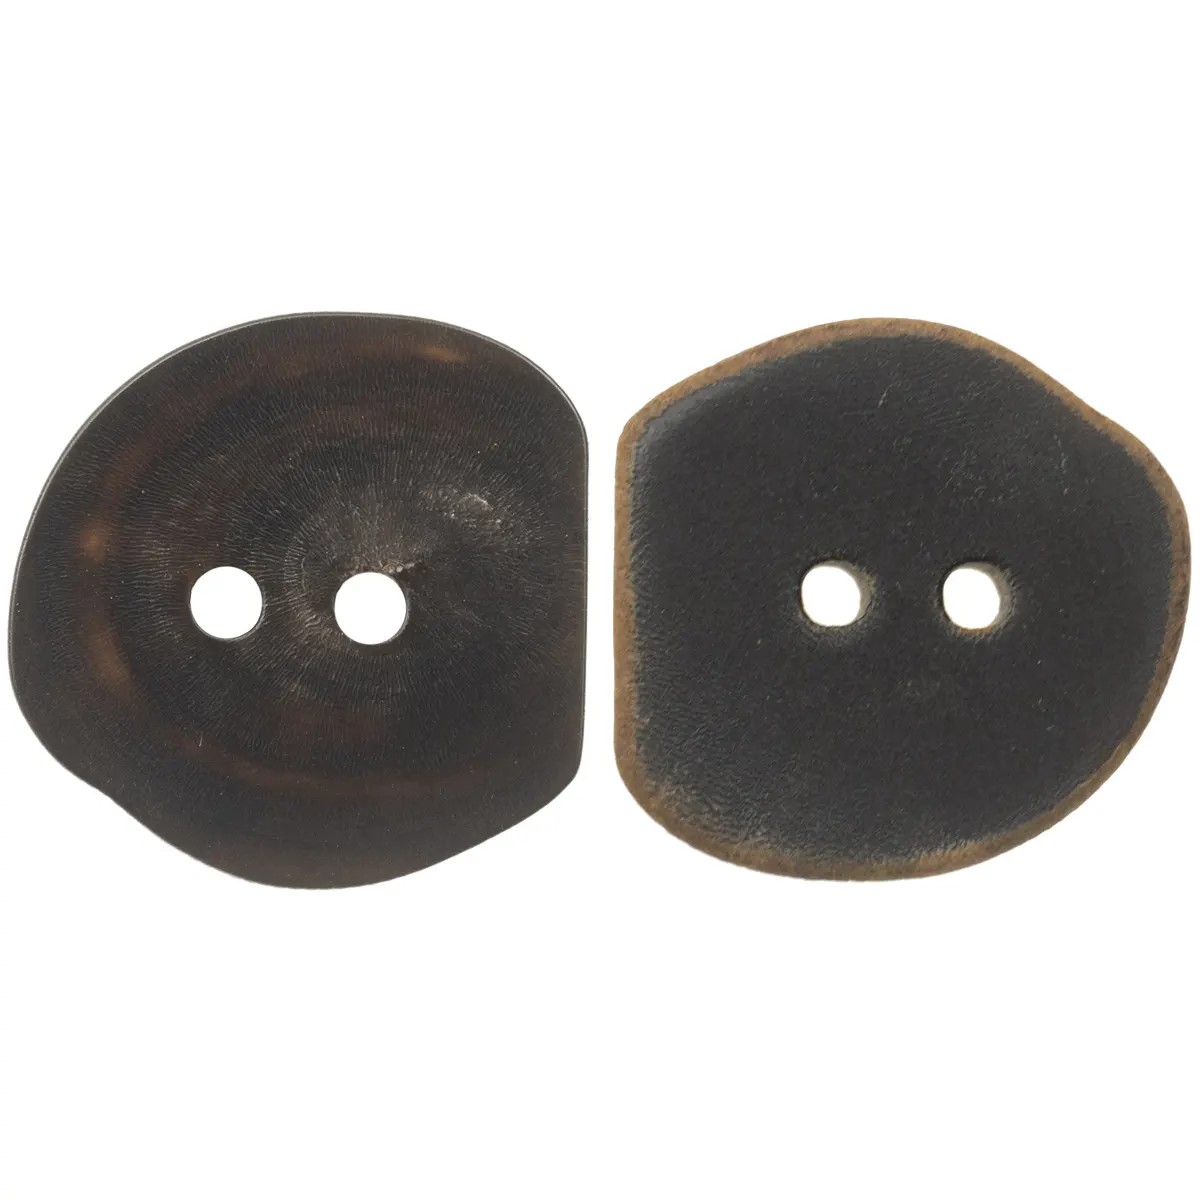 Irregular Shape Horn Buttons For Designer Clothing 2 Hole Genuine Horn Buttons Black Scorched Original Wholesale Stock